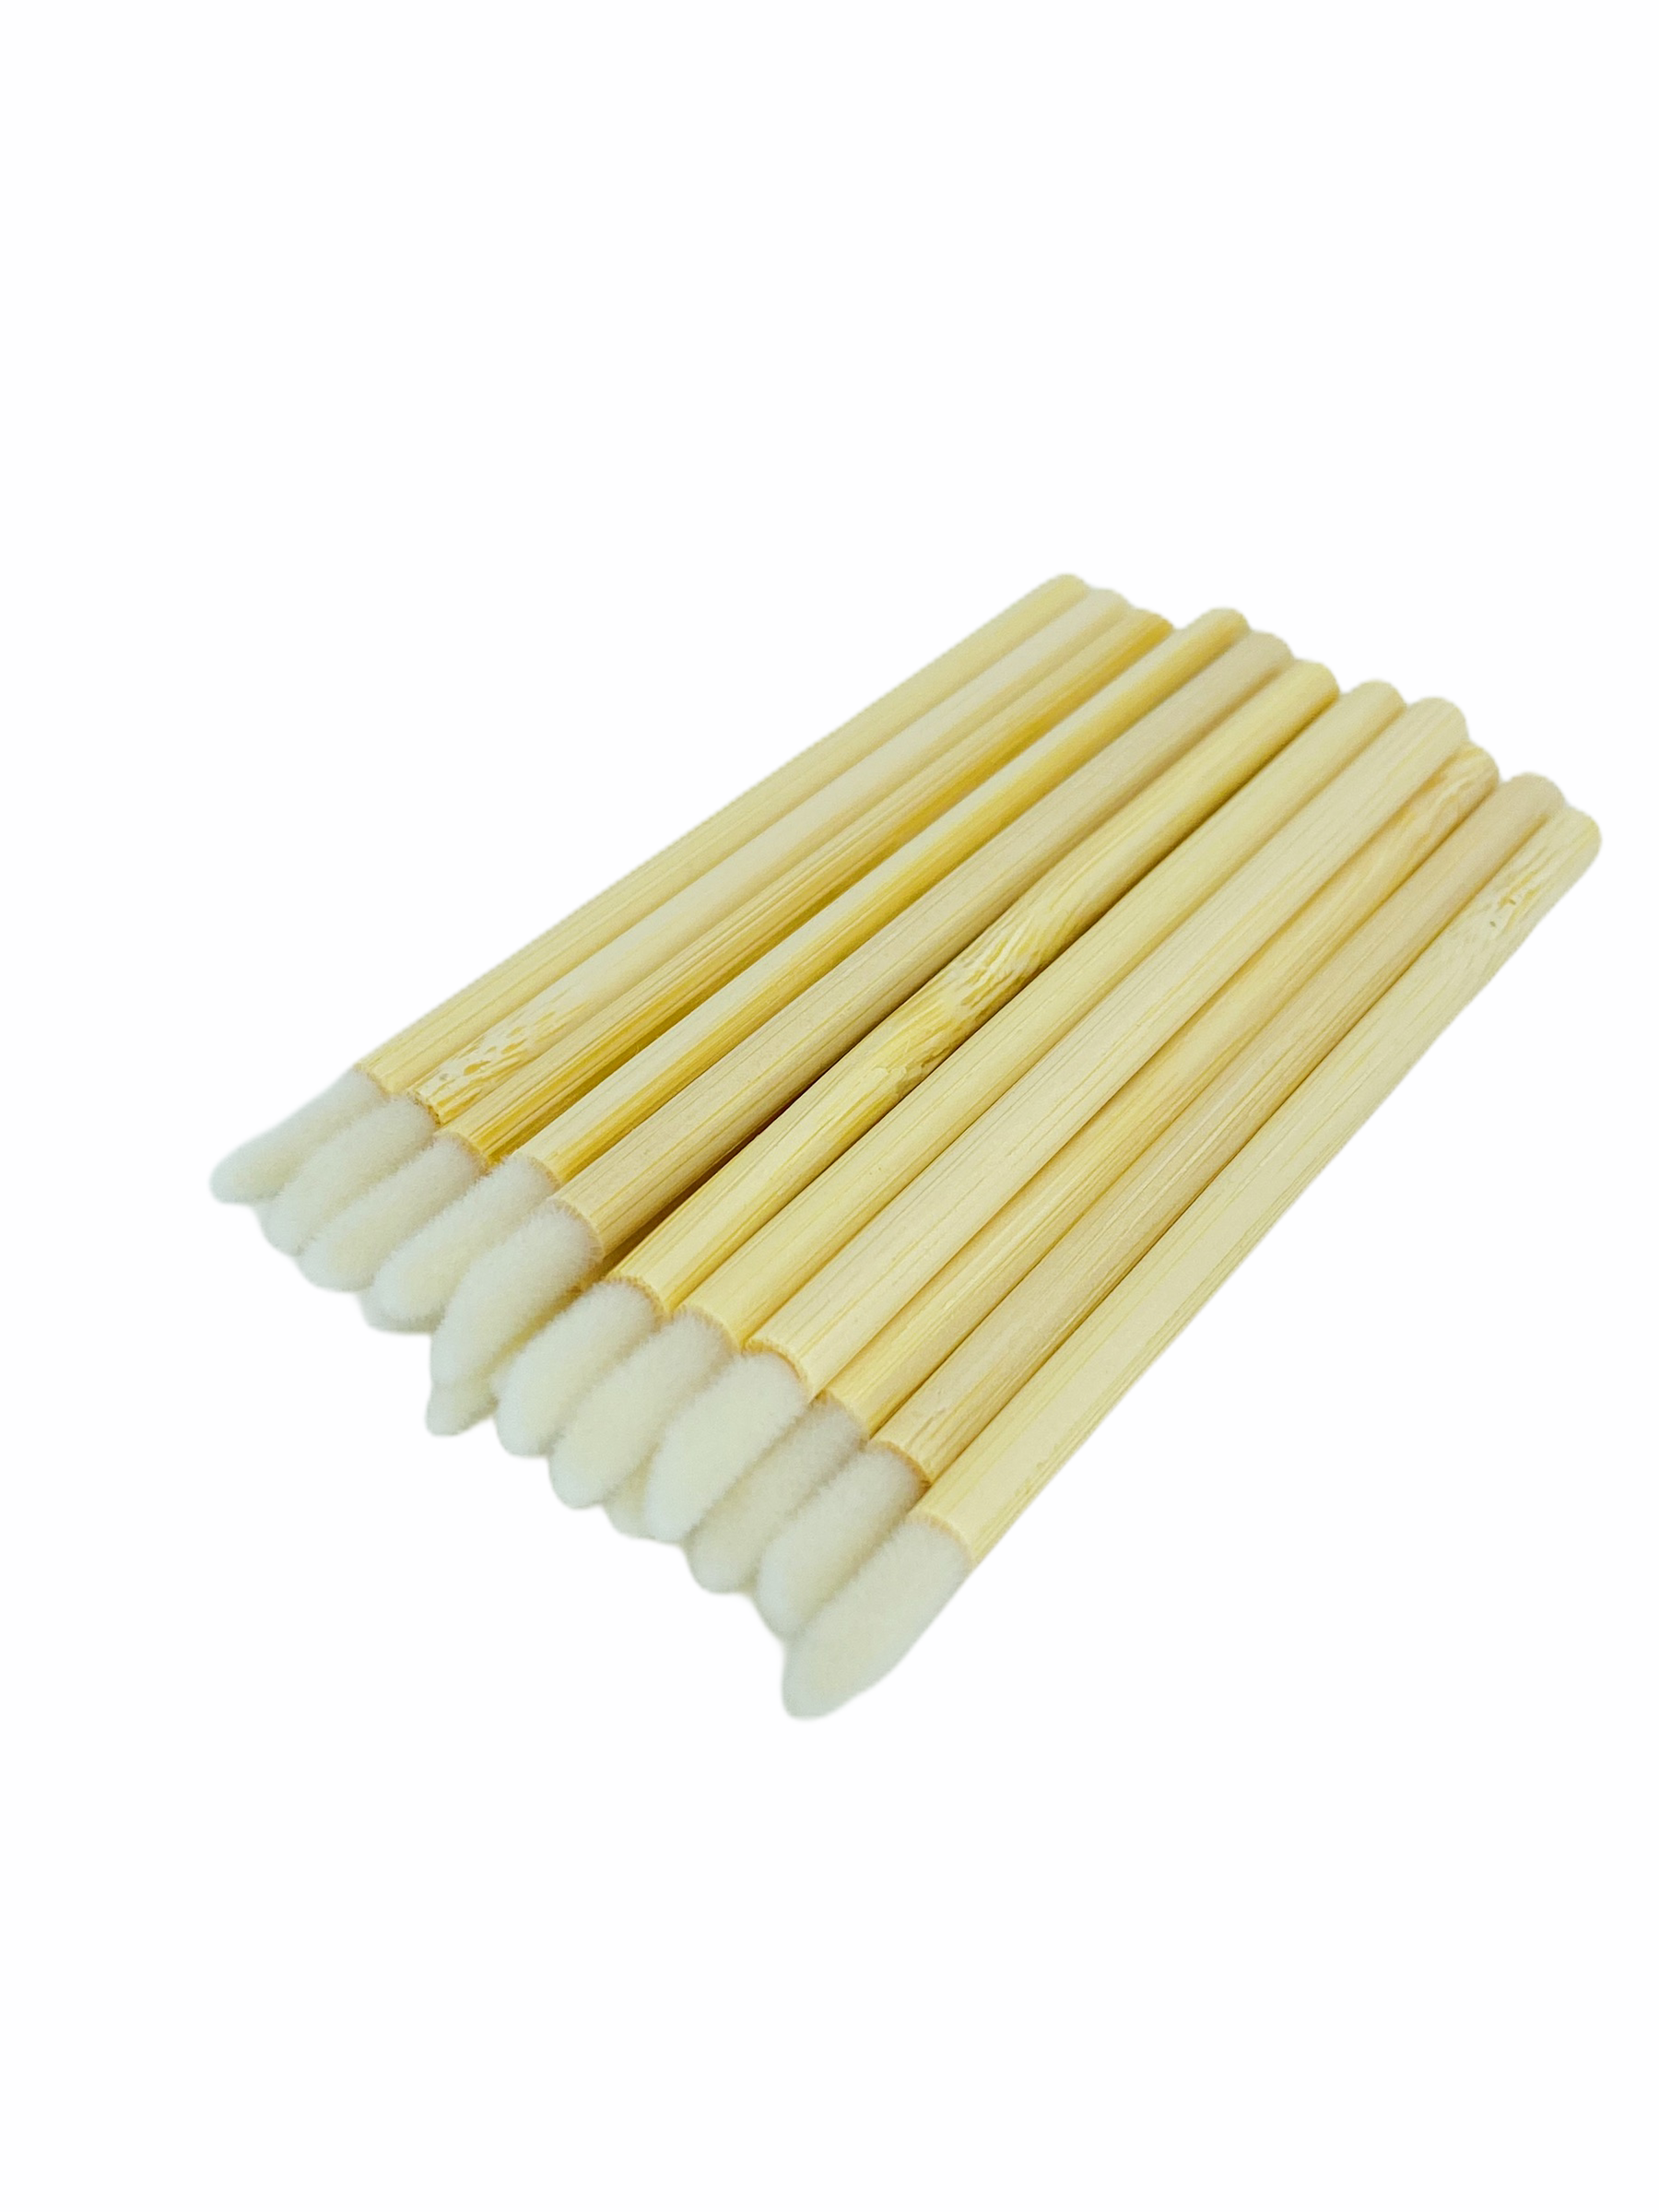 Aplicadores de labios de bambú